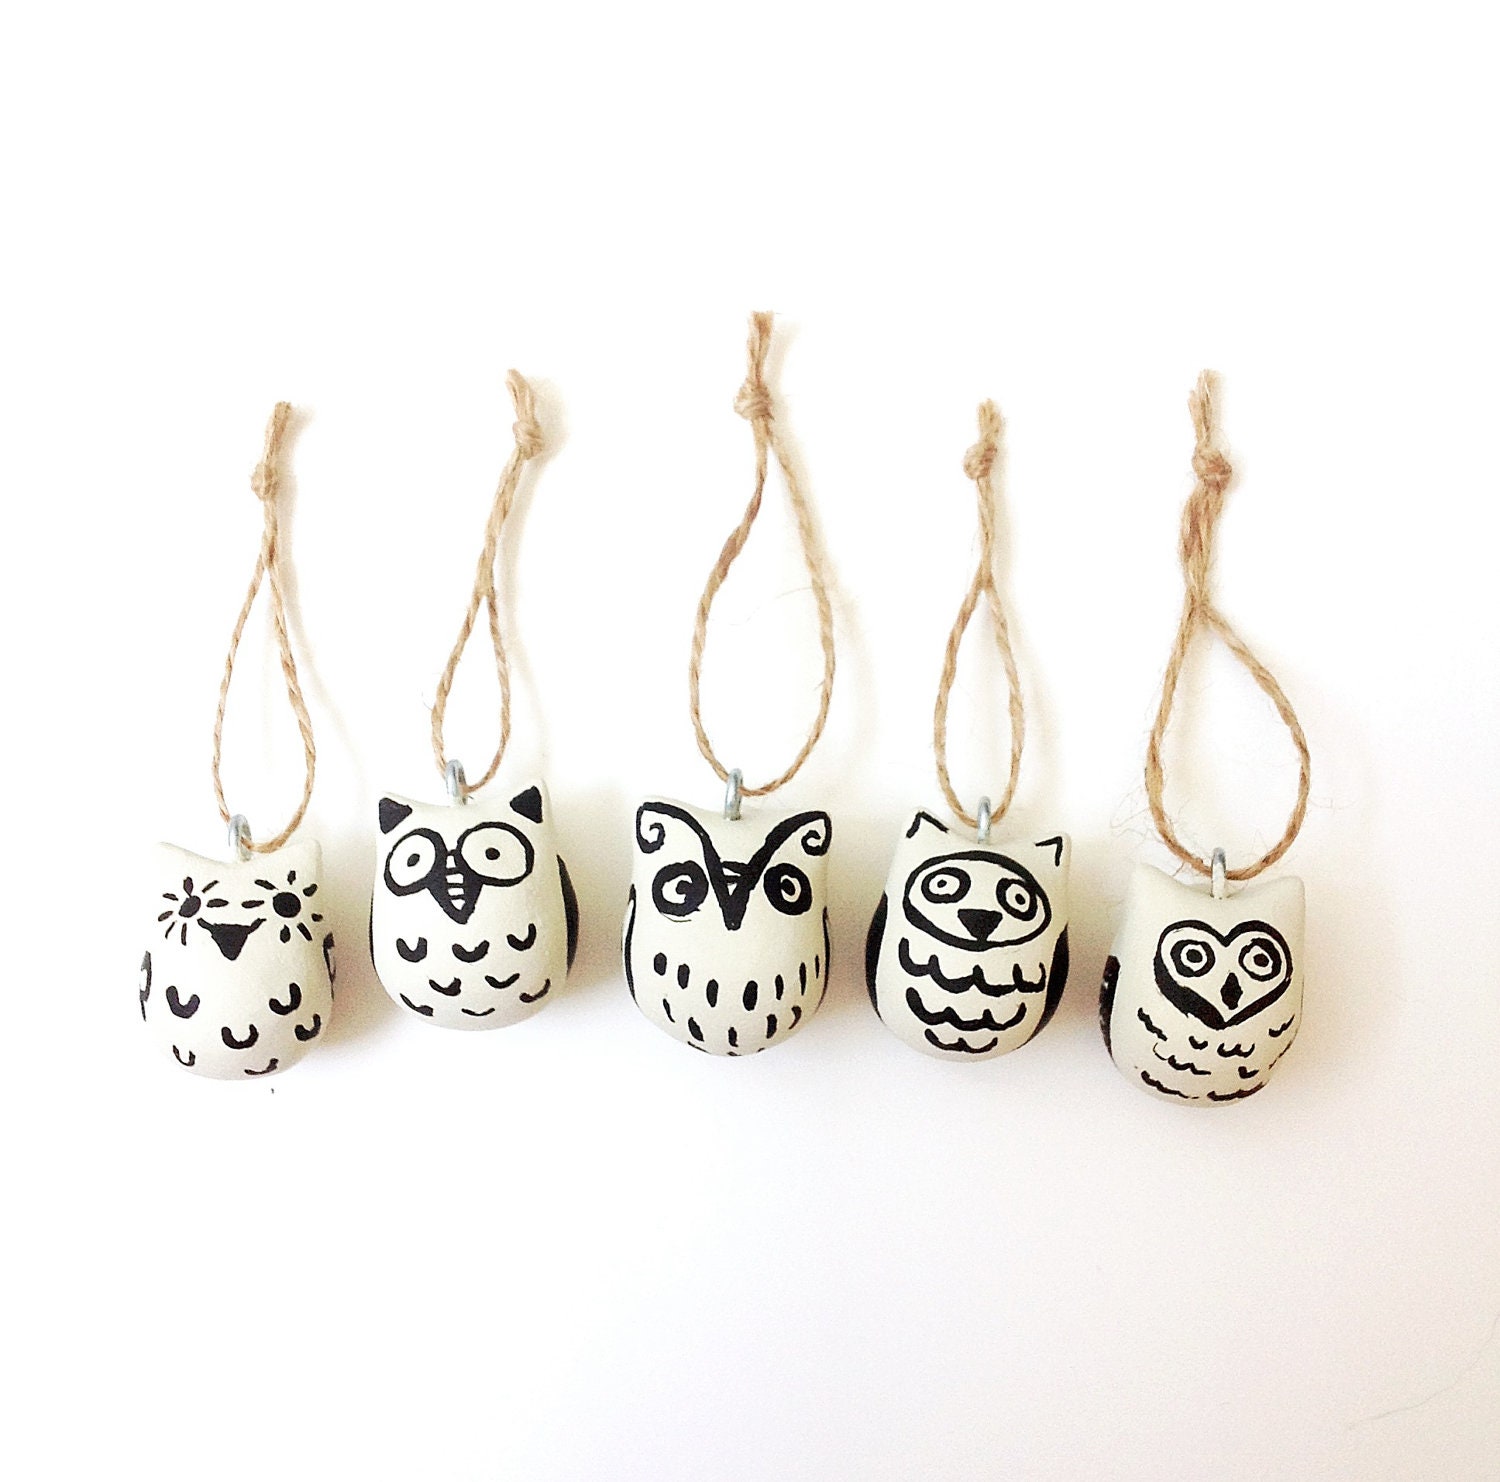 Owl Christmas ornaments - set of 5 - black and white - cute - woodland folk - neutrals - autumn - birds - oneeyeddog